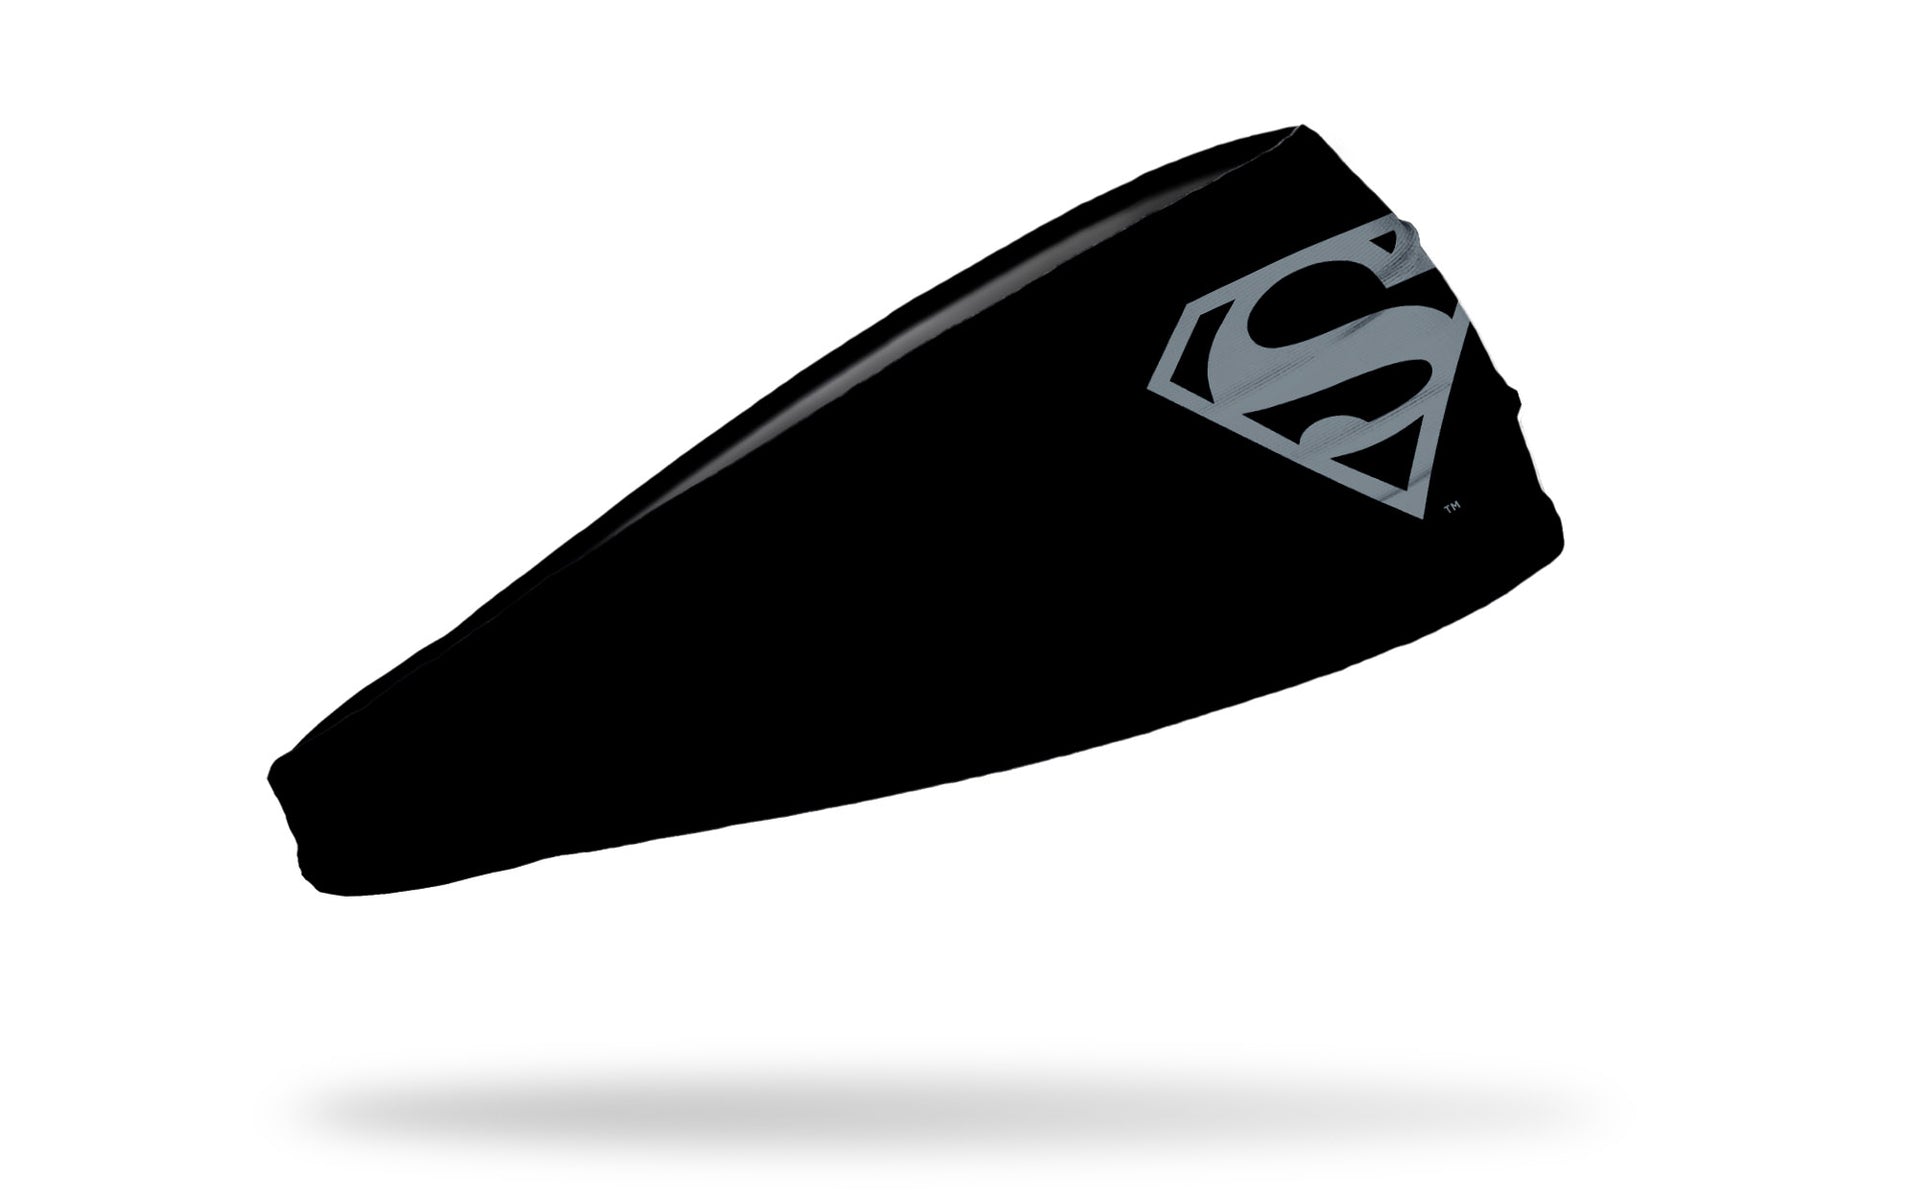 superman logo black and white